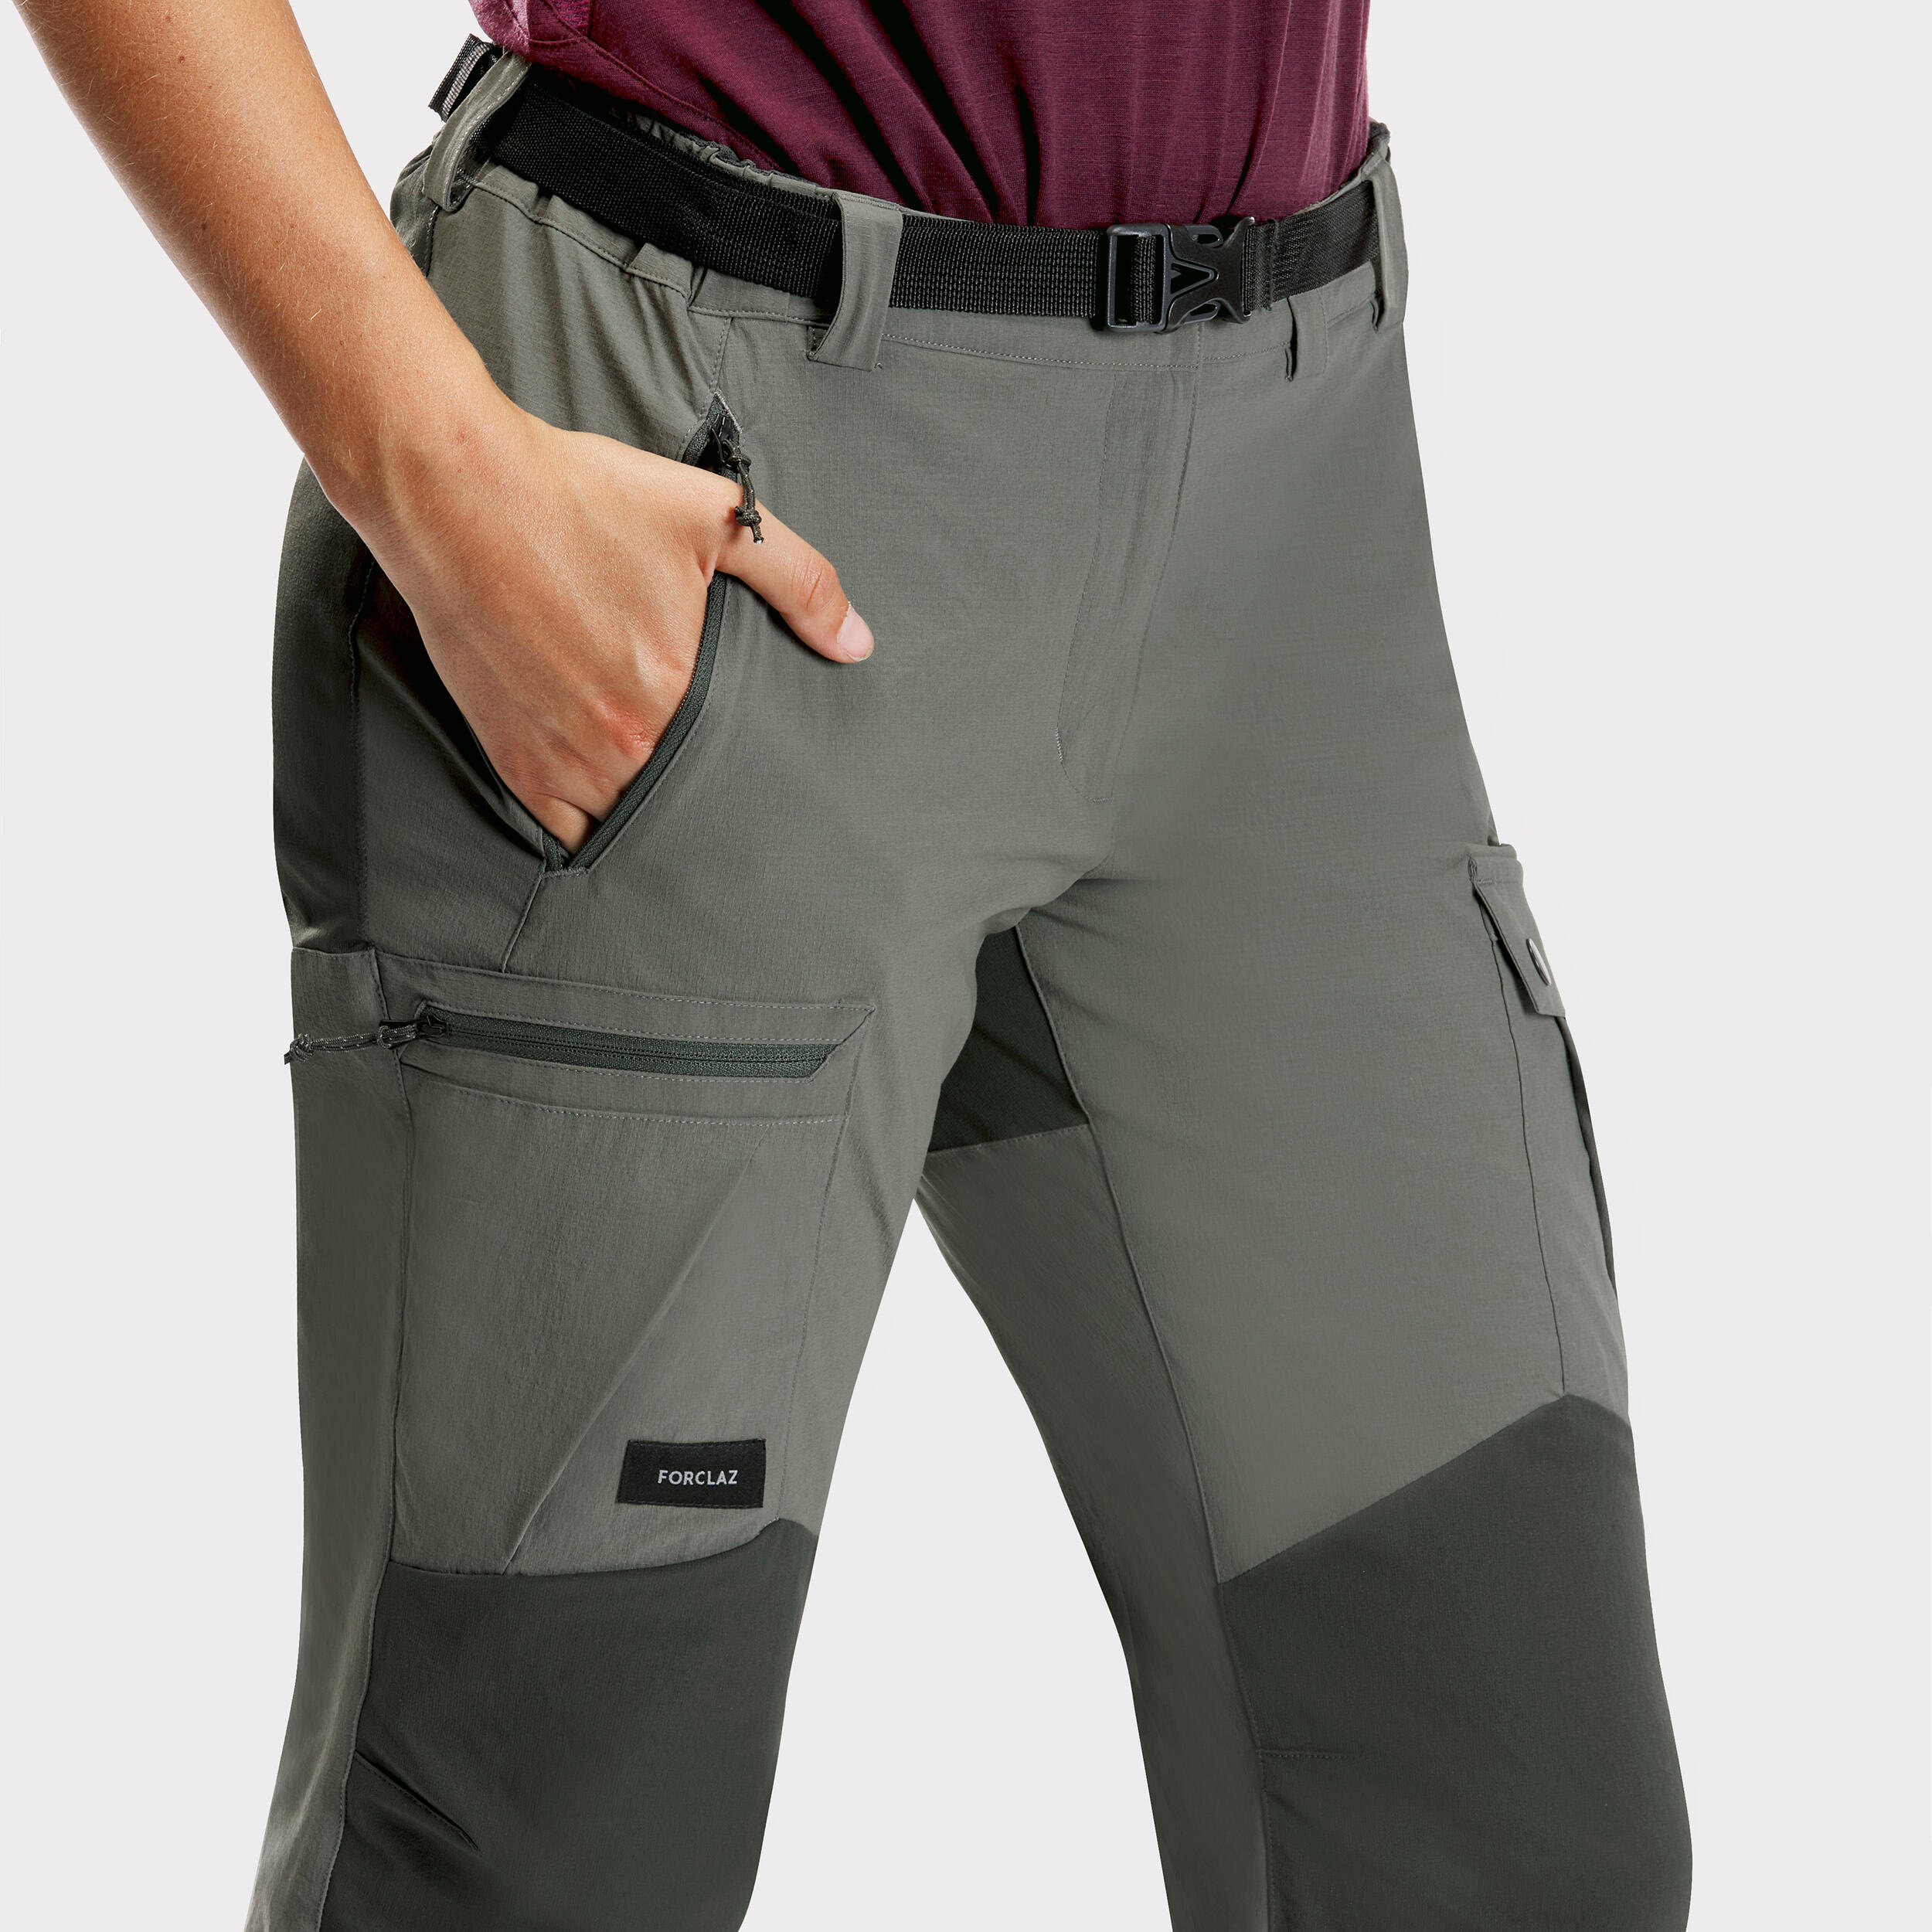 Decathlon Forclaz Trek 500 Convertible Hiking Pants Mens   httpsdailystoremallcom